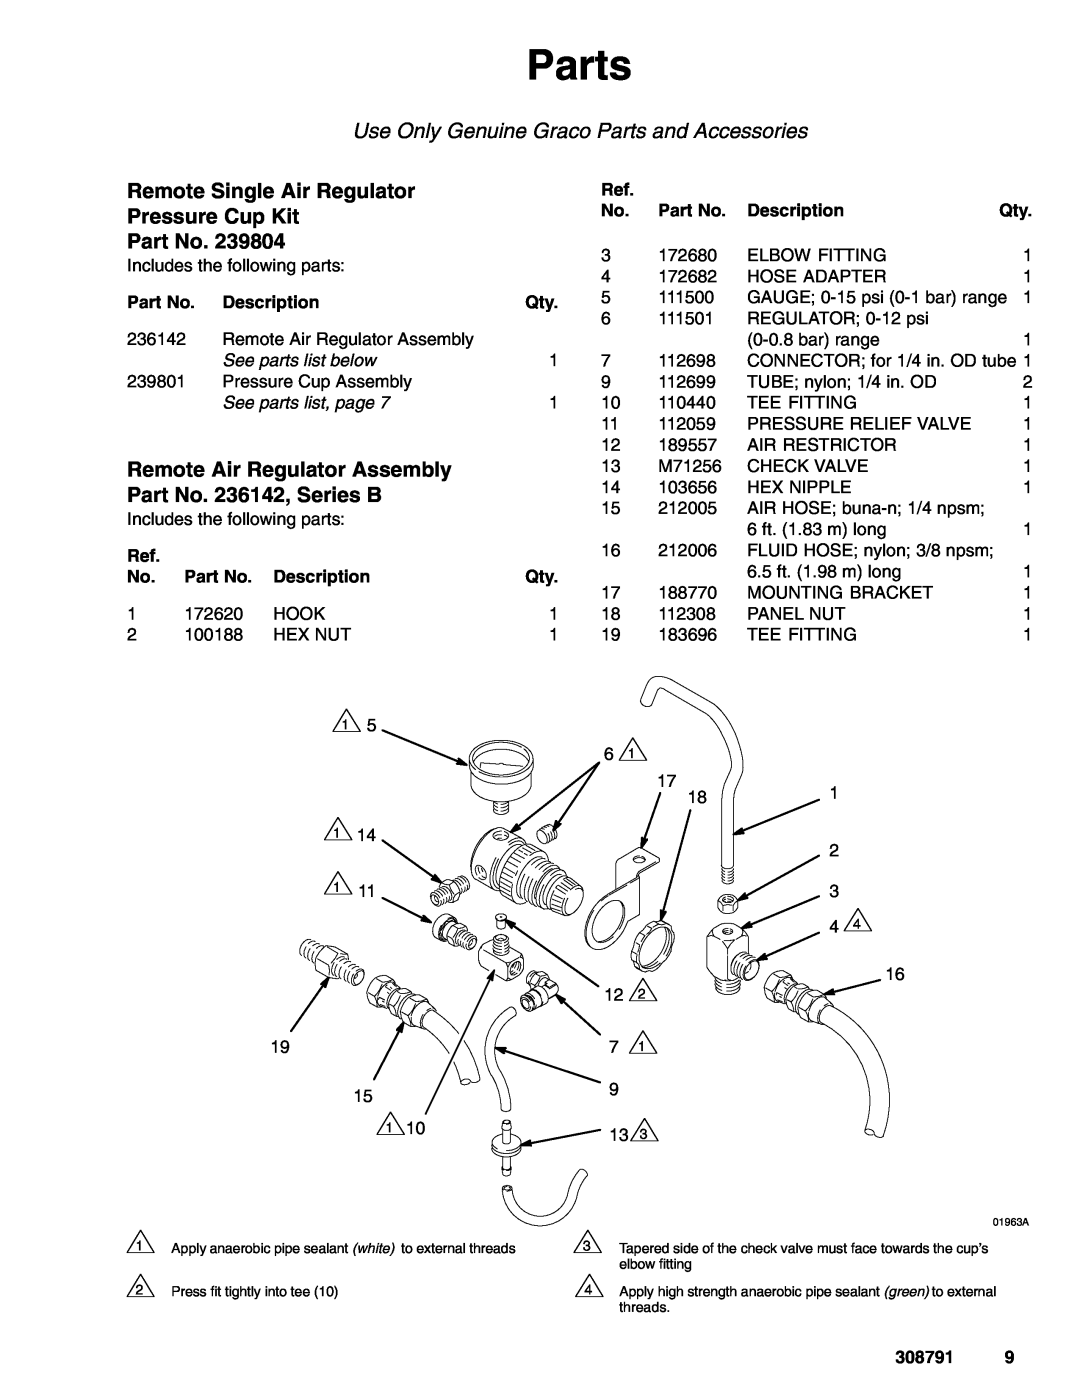 Graco 308791E Remote Single Air Regulator, Pressure Cup Kit, Remote Air Regulator Assembly, Part No. 236142, Series B 